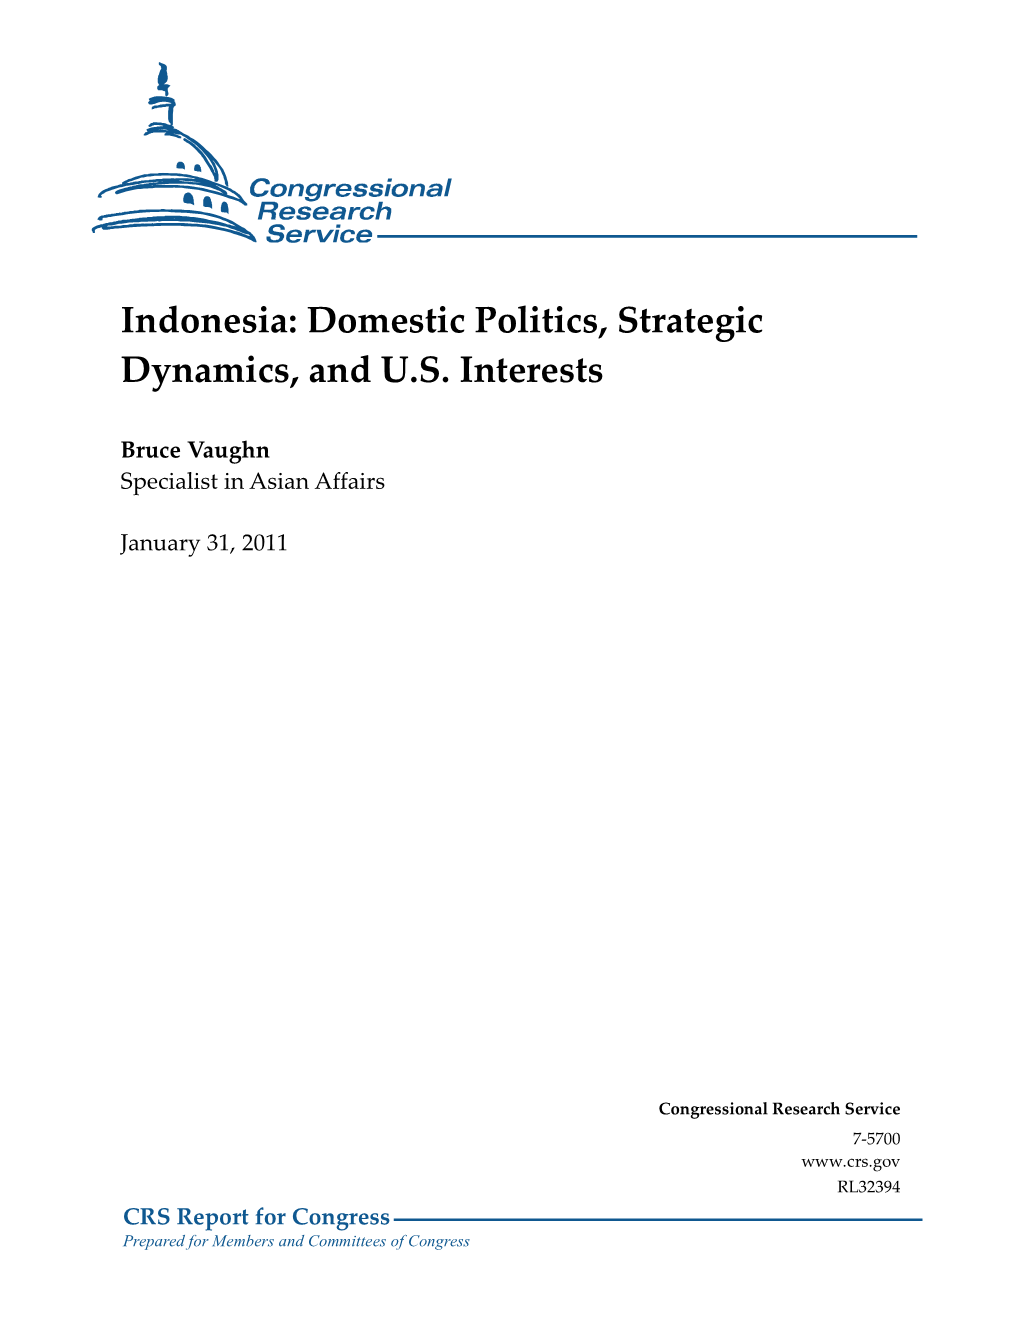 Indonesia: Domestic Politics, Strategic Dynamics, and U.S